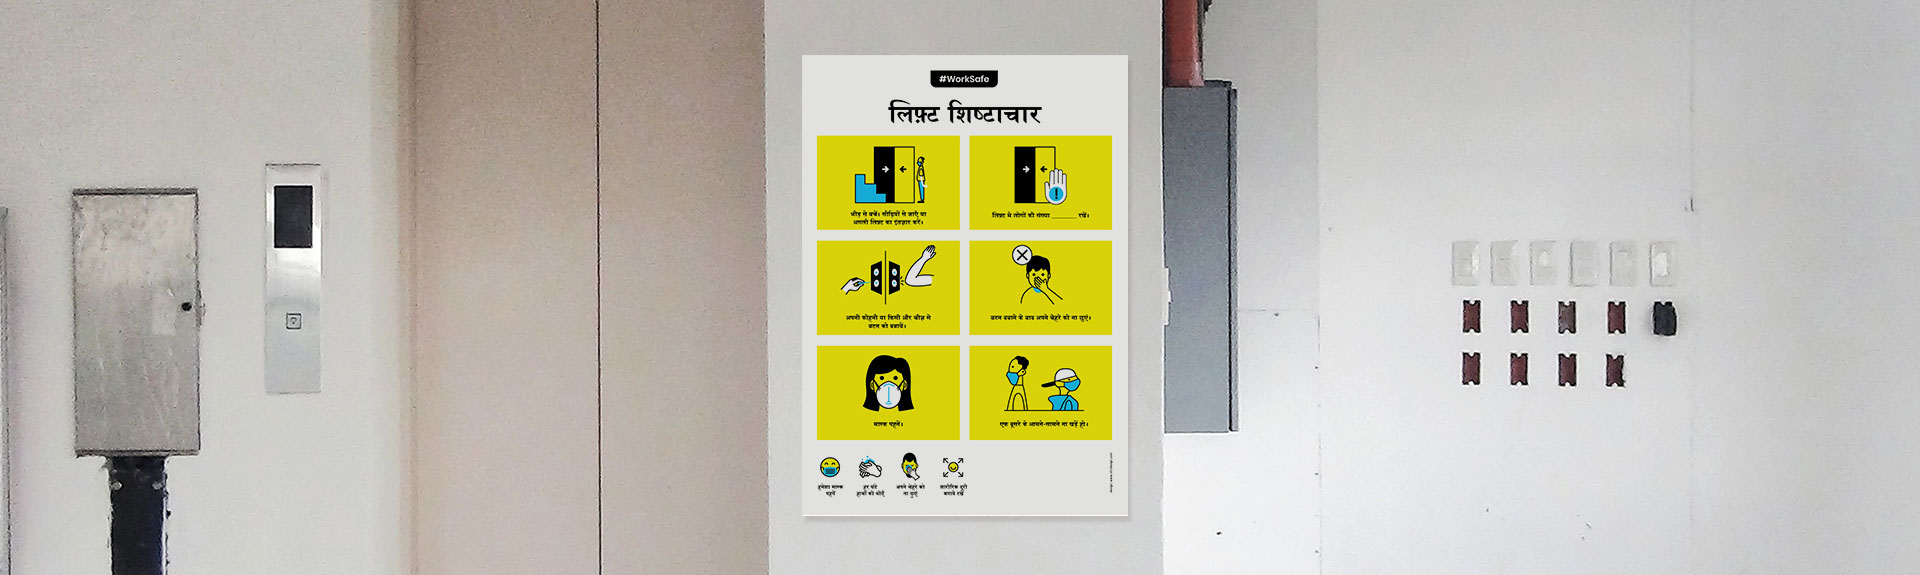 Elevator-manners-2-hindi_web-banner